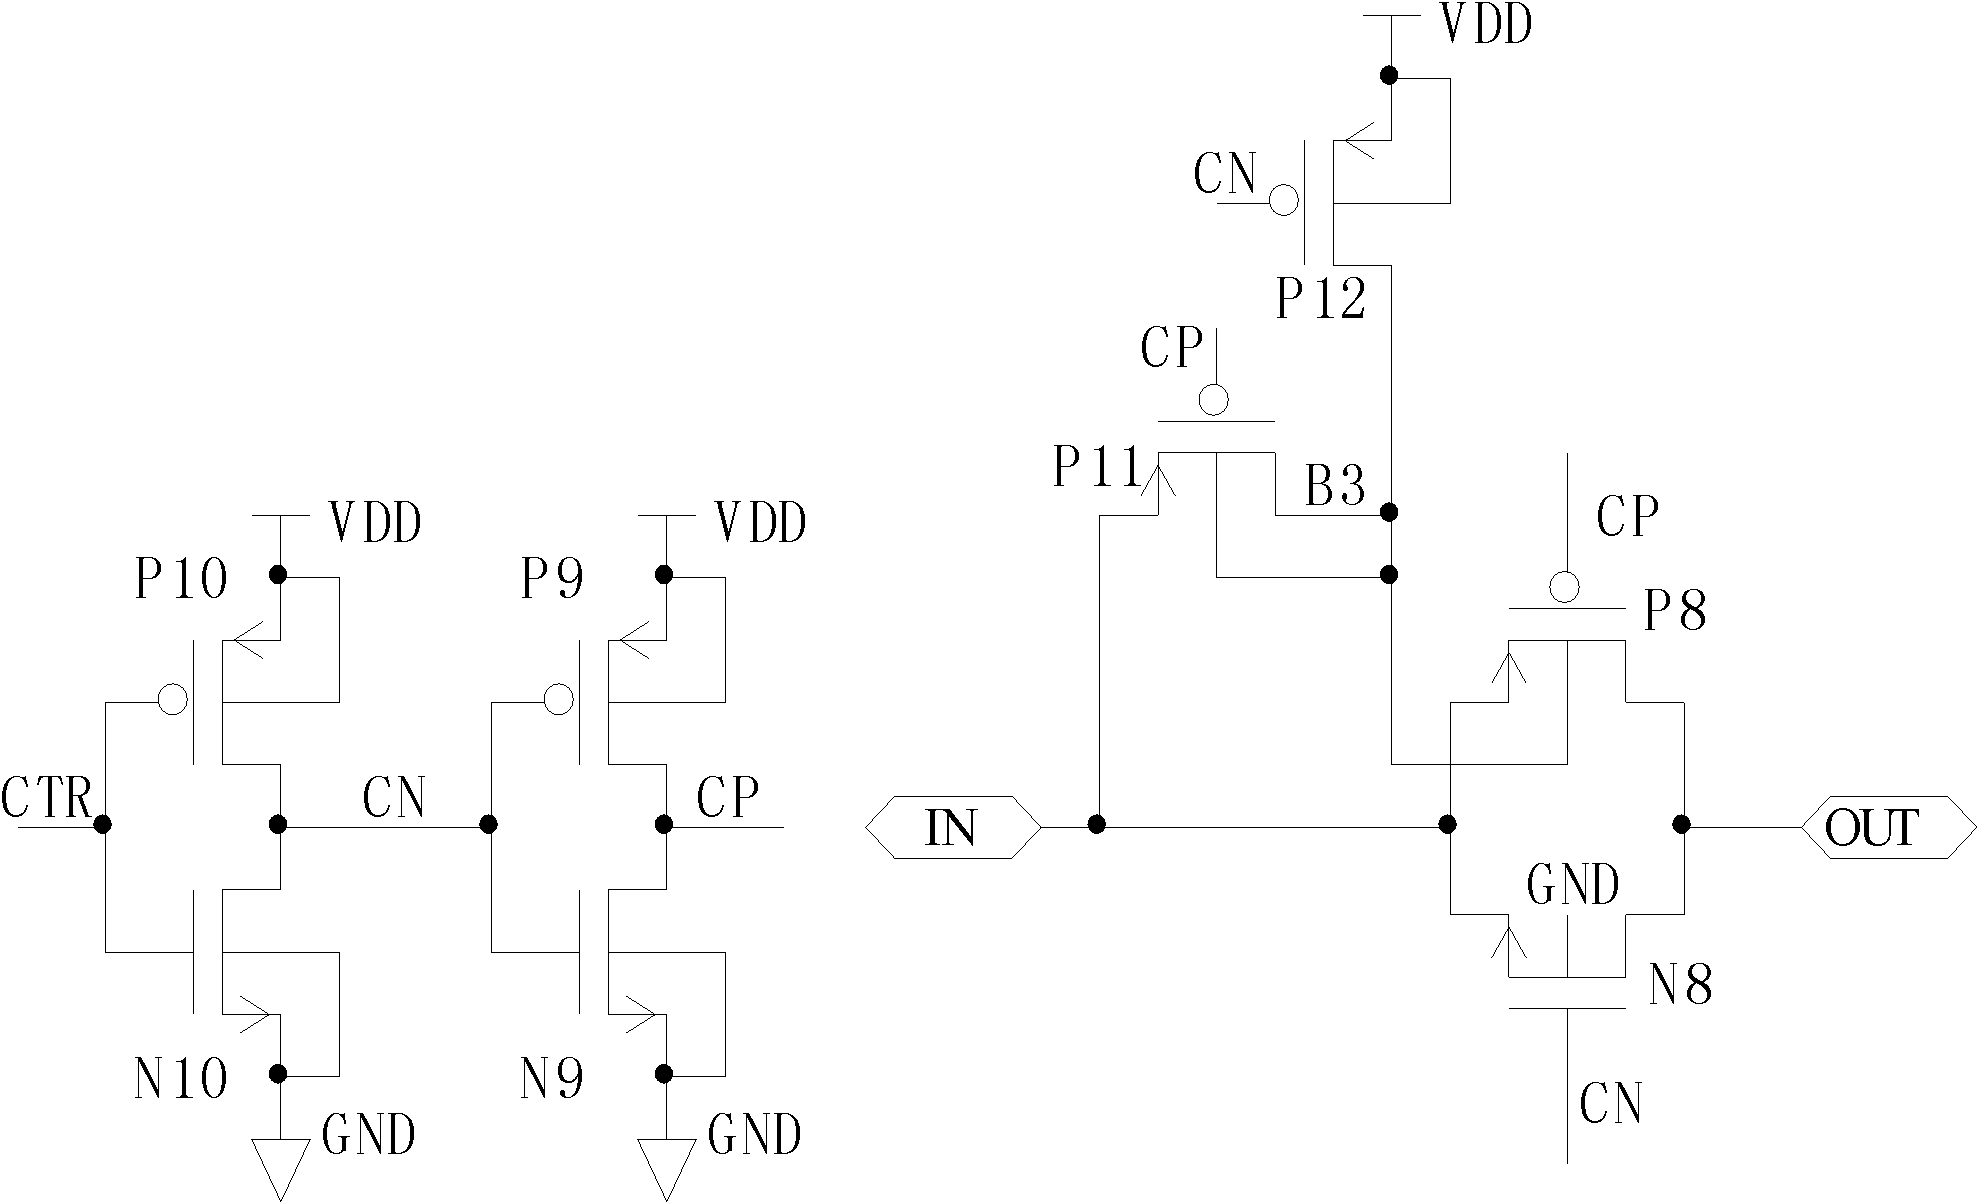 Simulative switch circuit structure